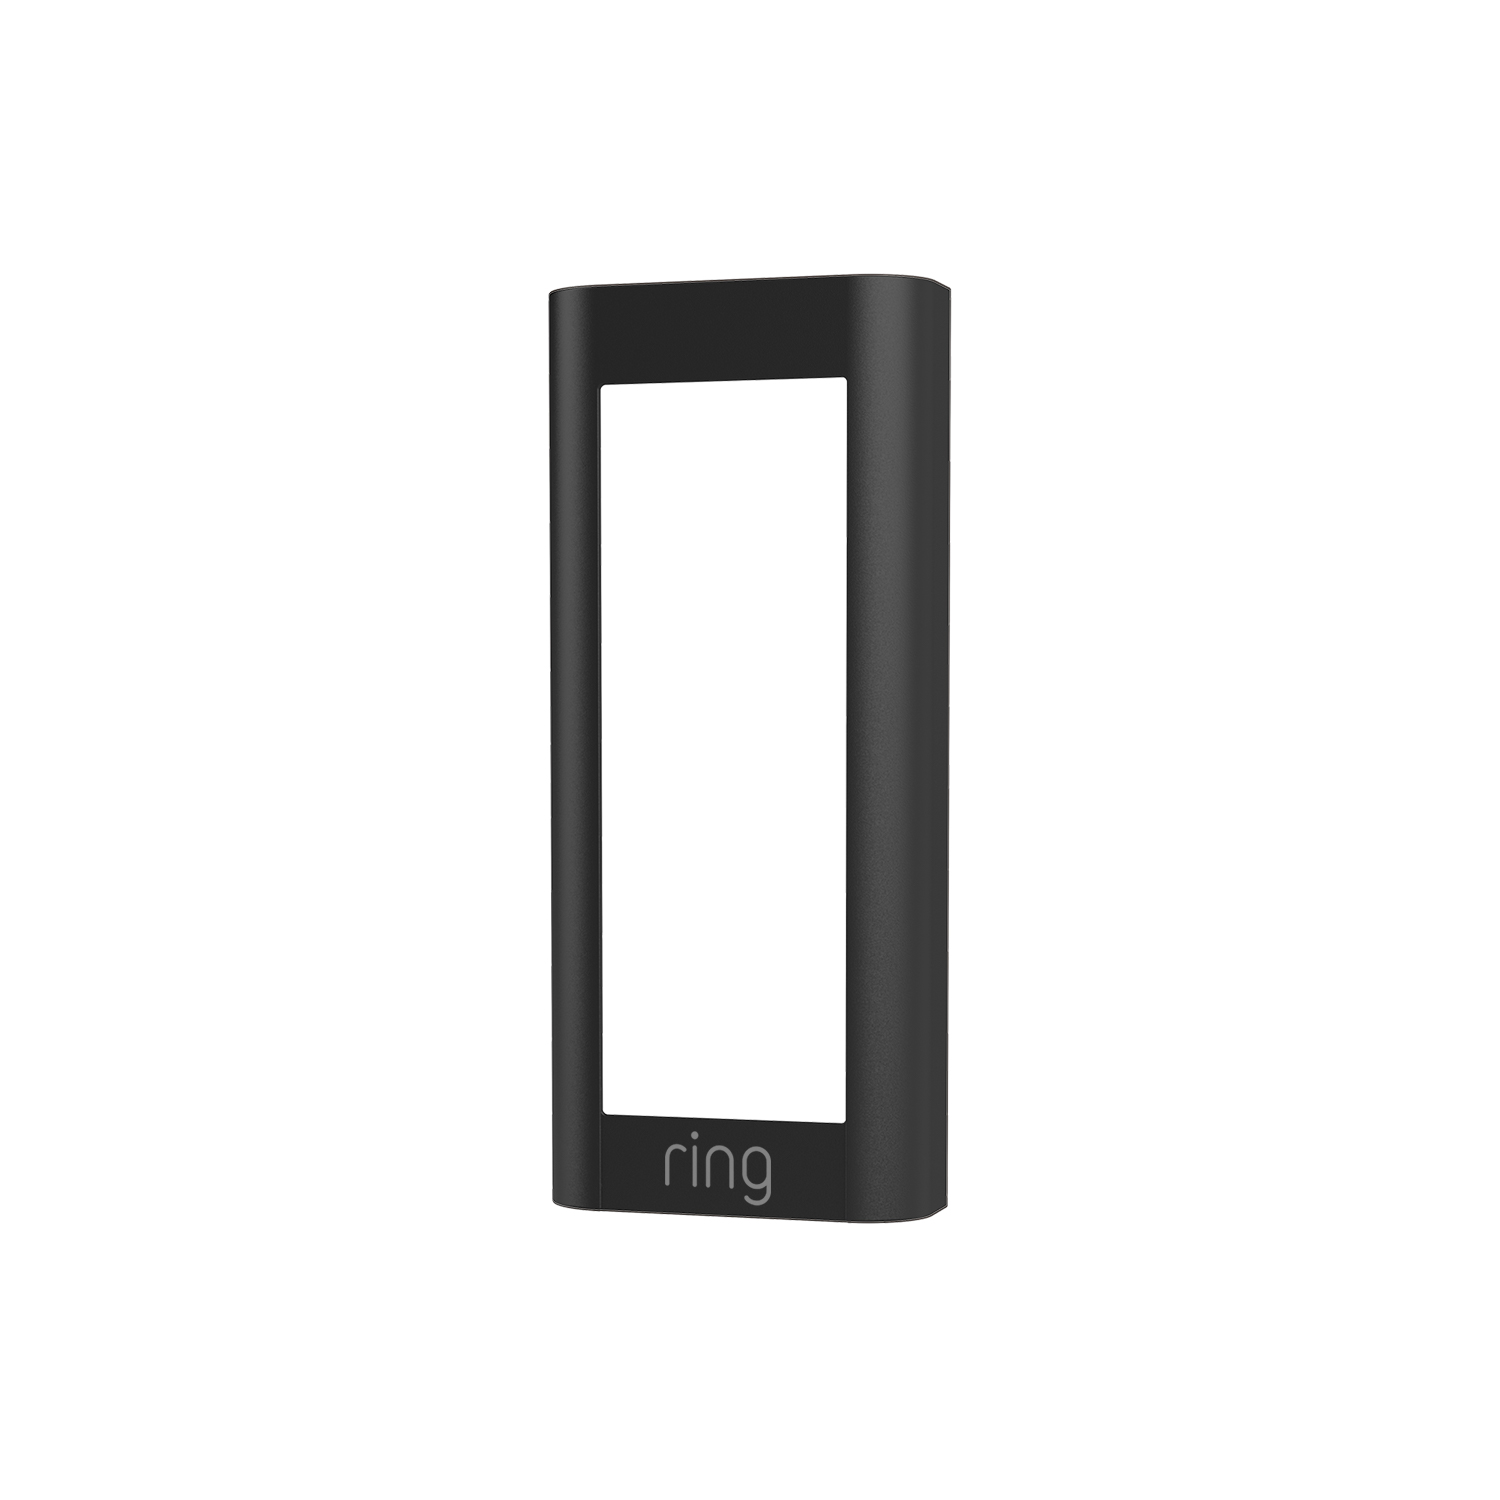 Interchangeable Faceplate (for Wired Video Doorbell Pro (Video Doorbell Pro 2)) - Smooth Black